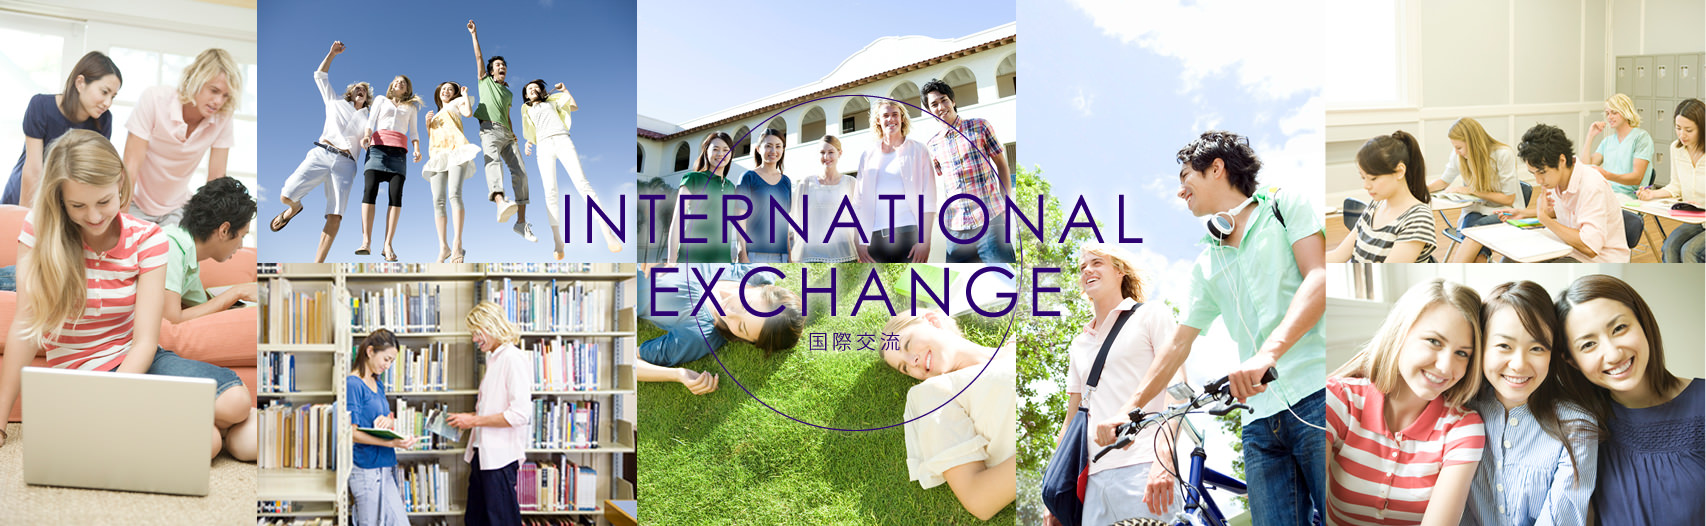 INTERNATIONAL EXCHANGE 国際交流